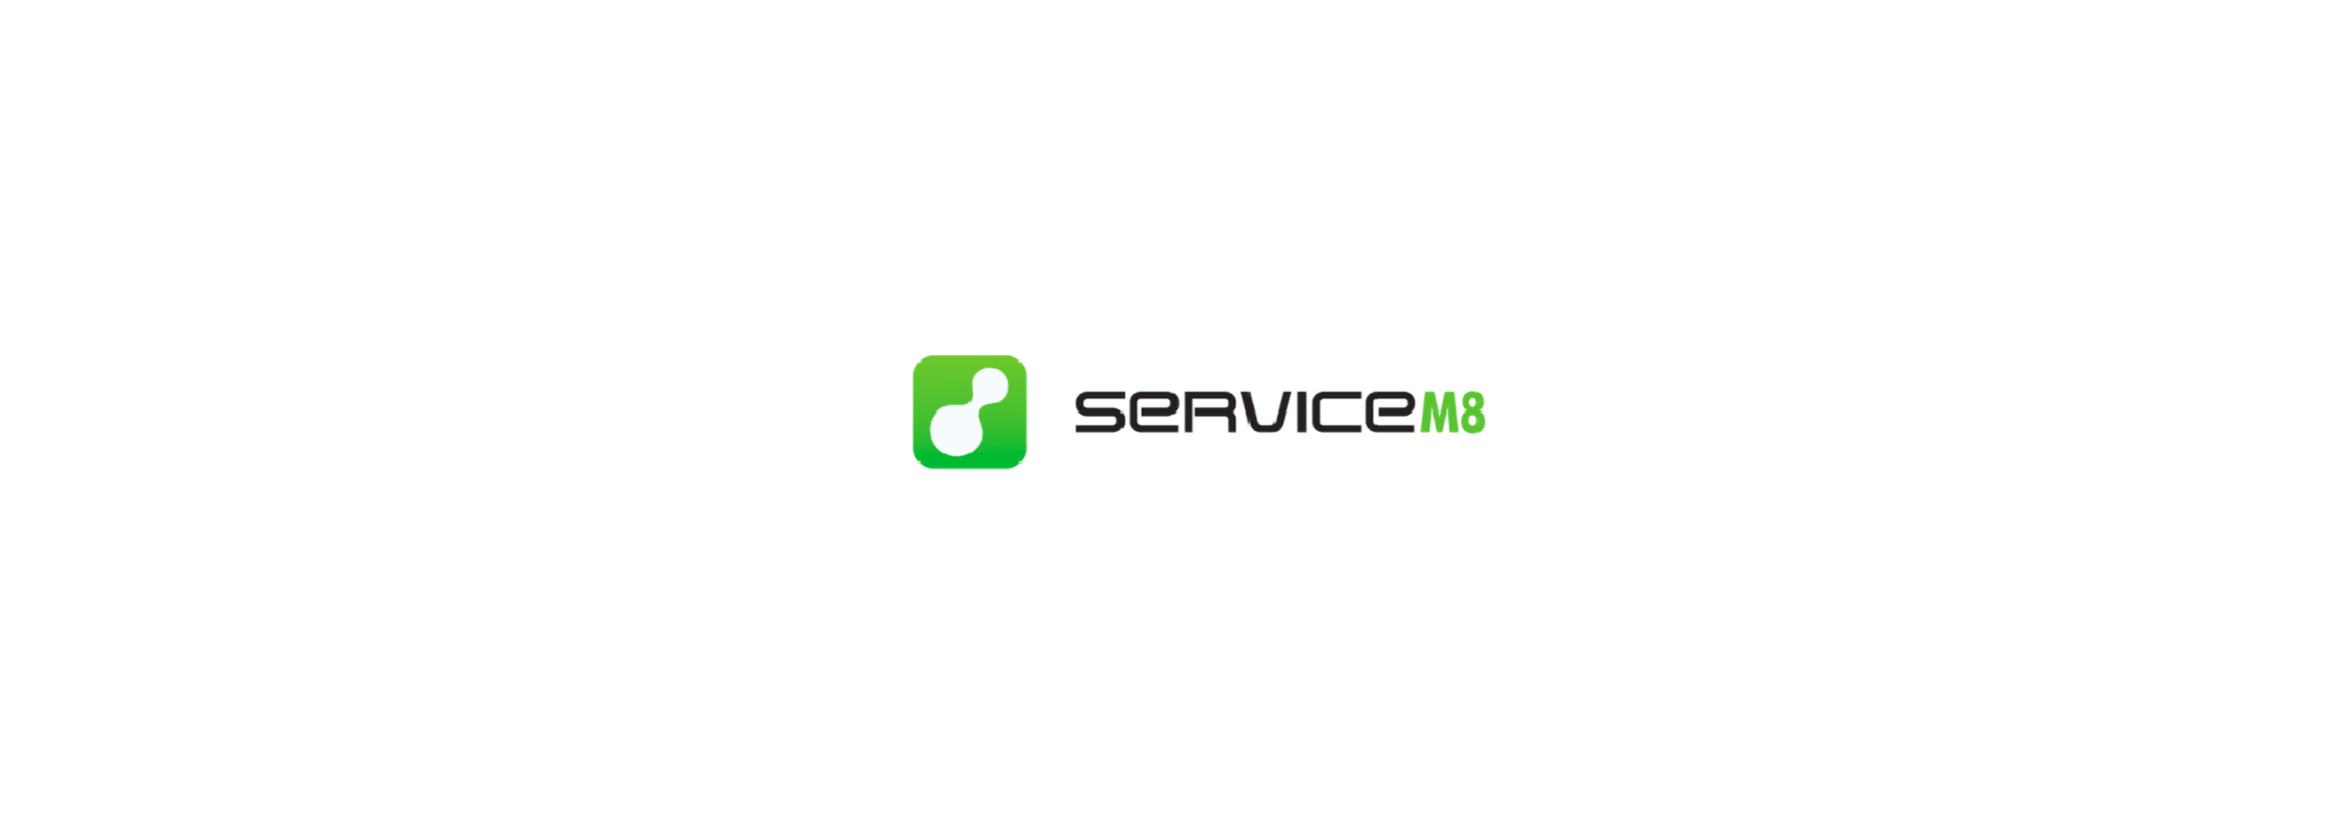 The ServiceM8 logo